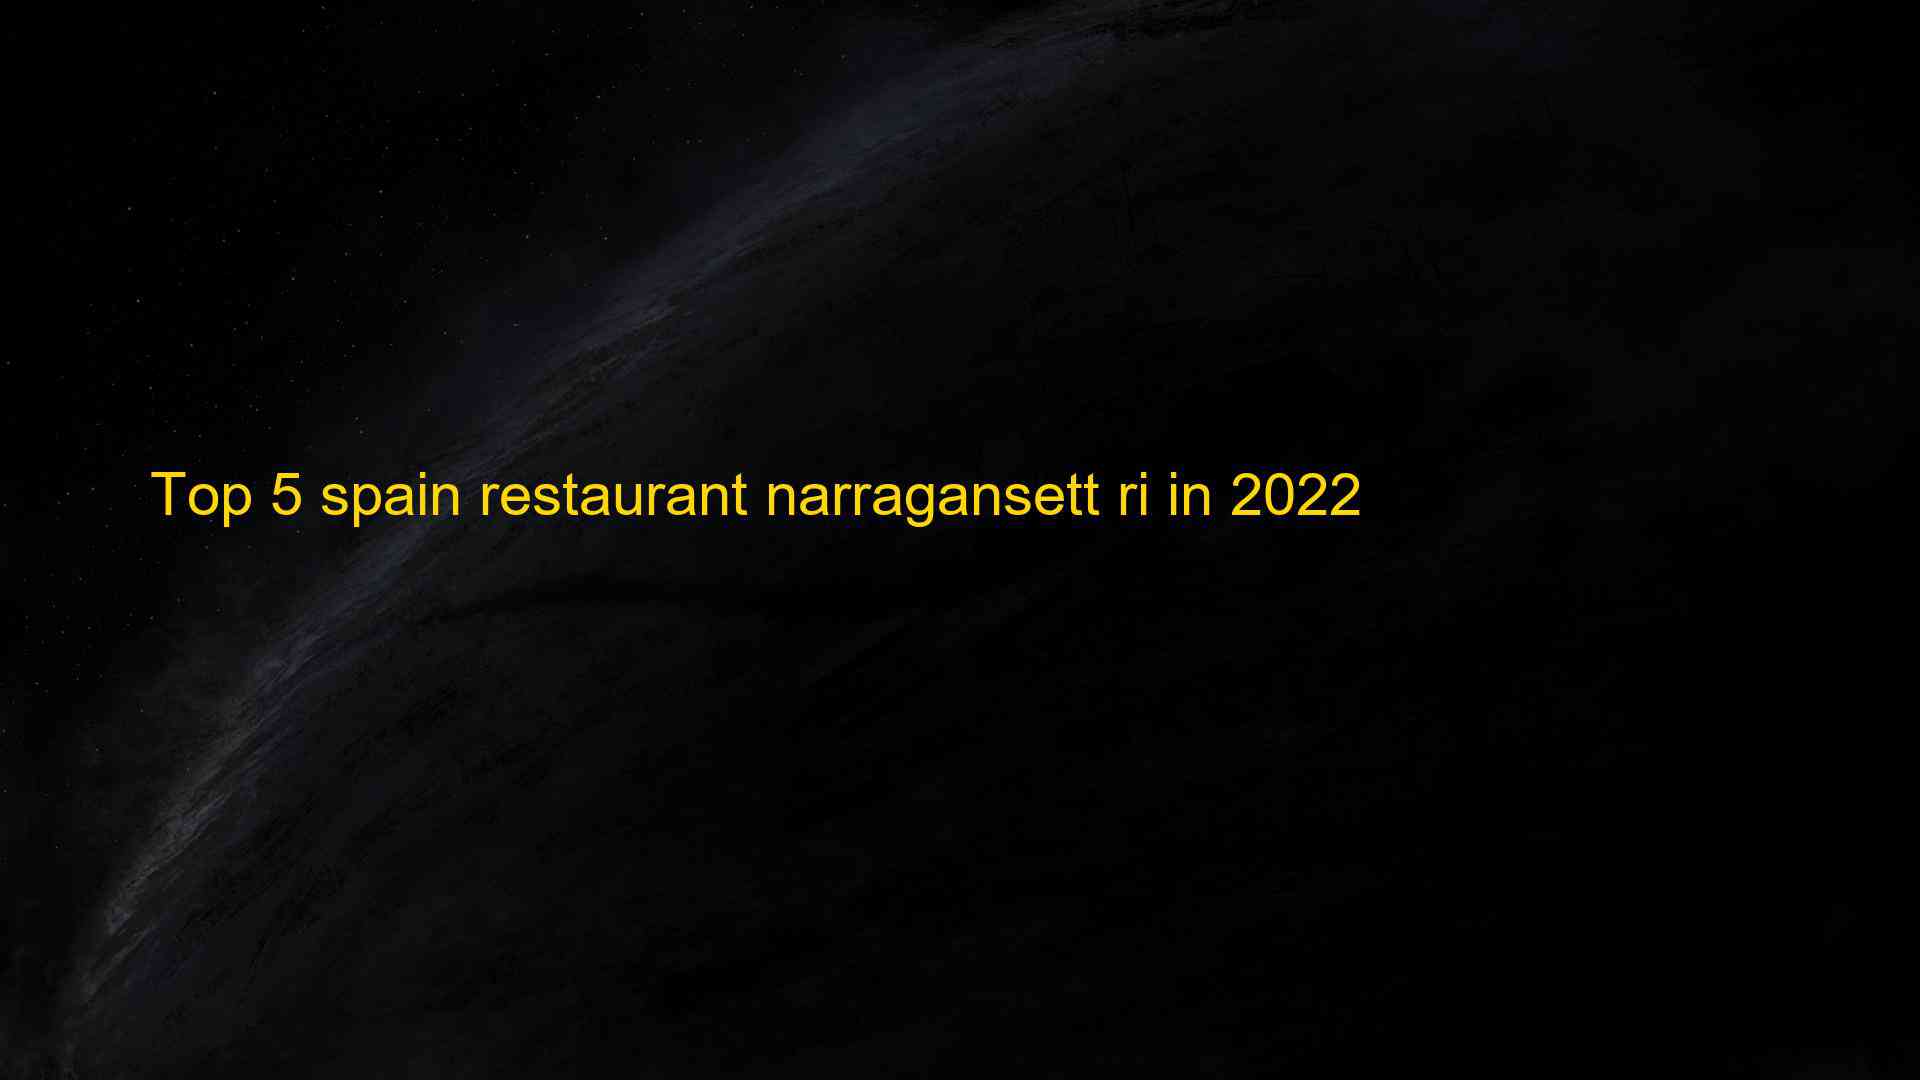 Top 5 spain restaurant narragansett ri in 2022 1663531116